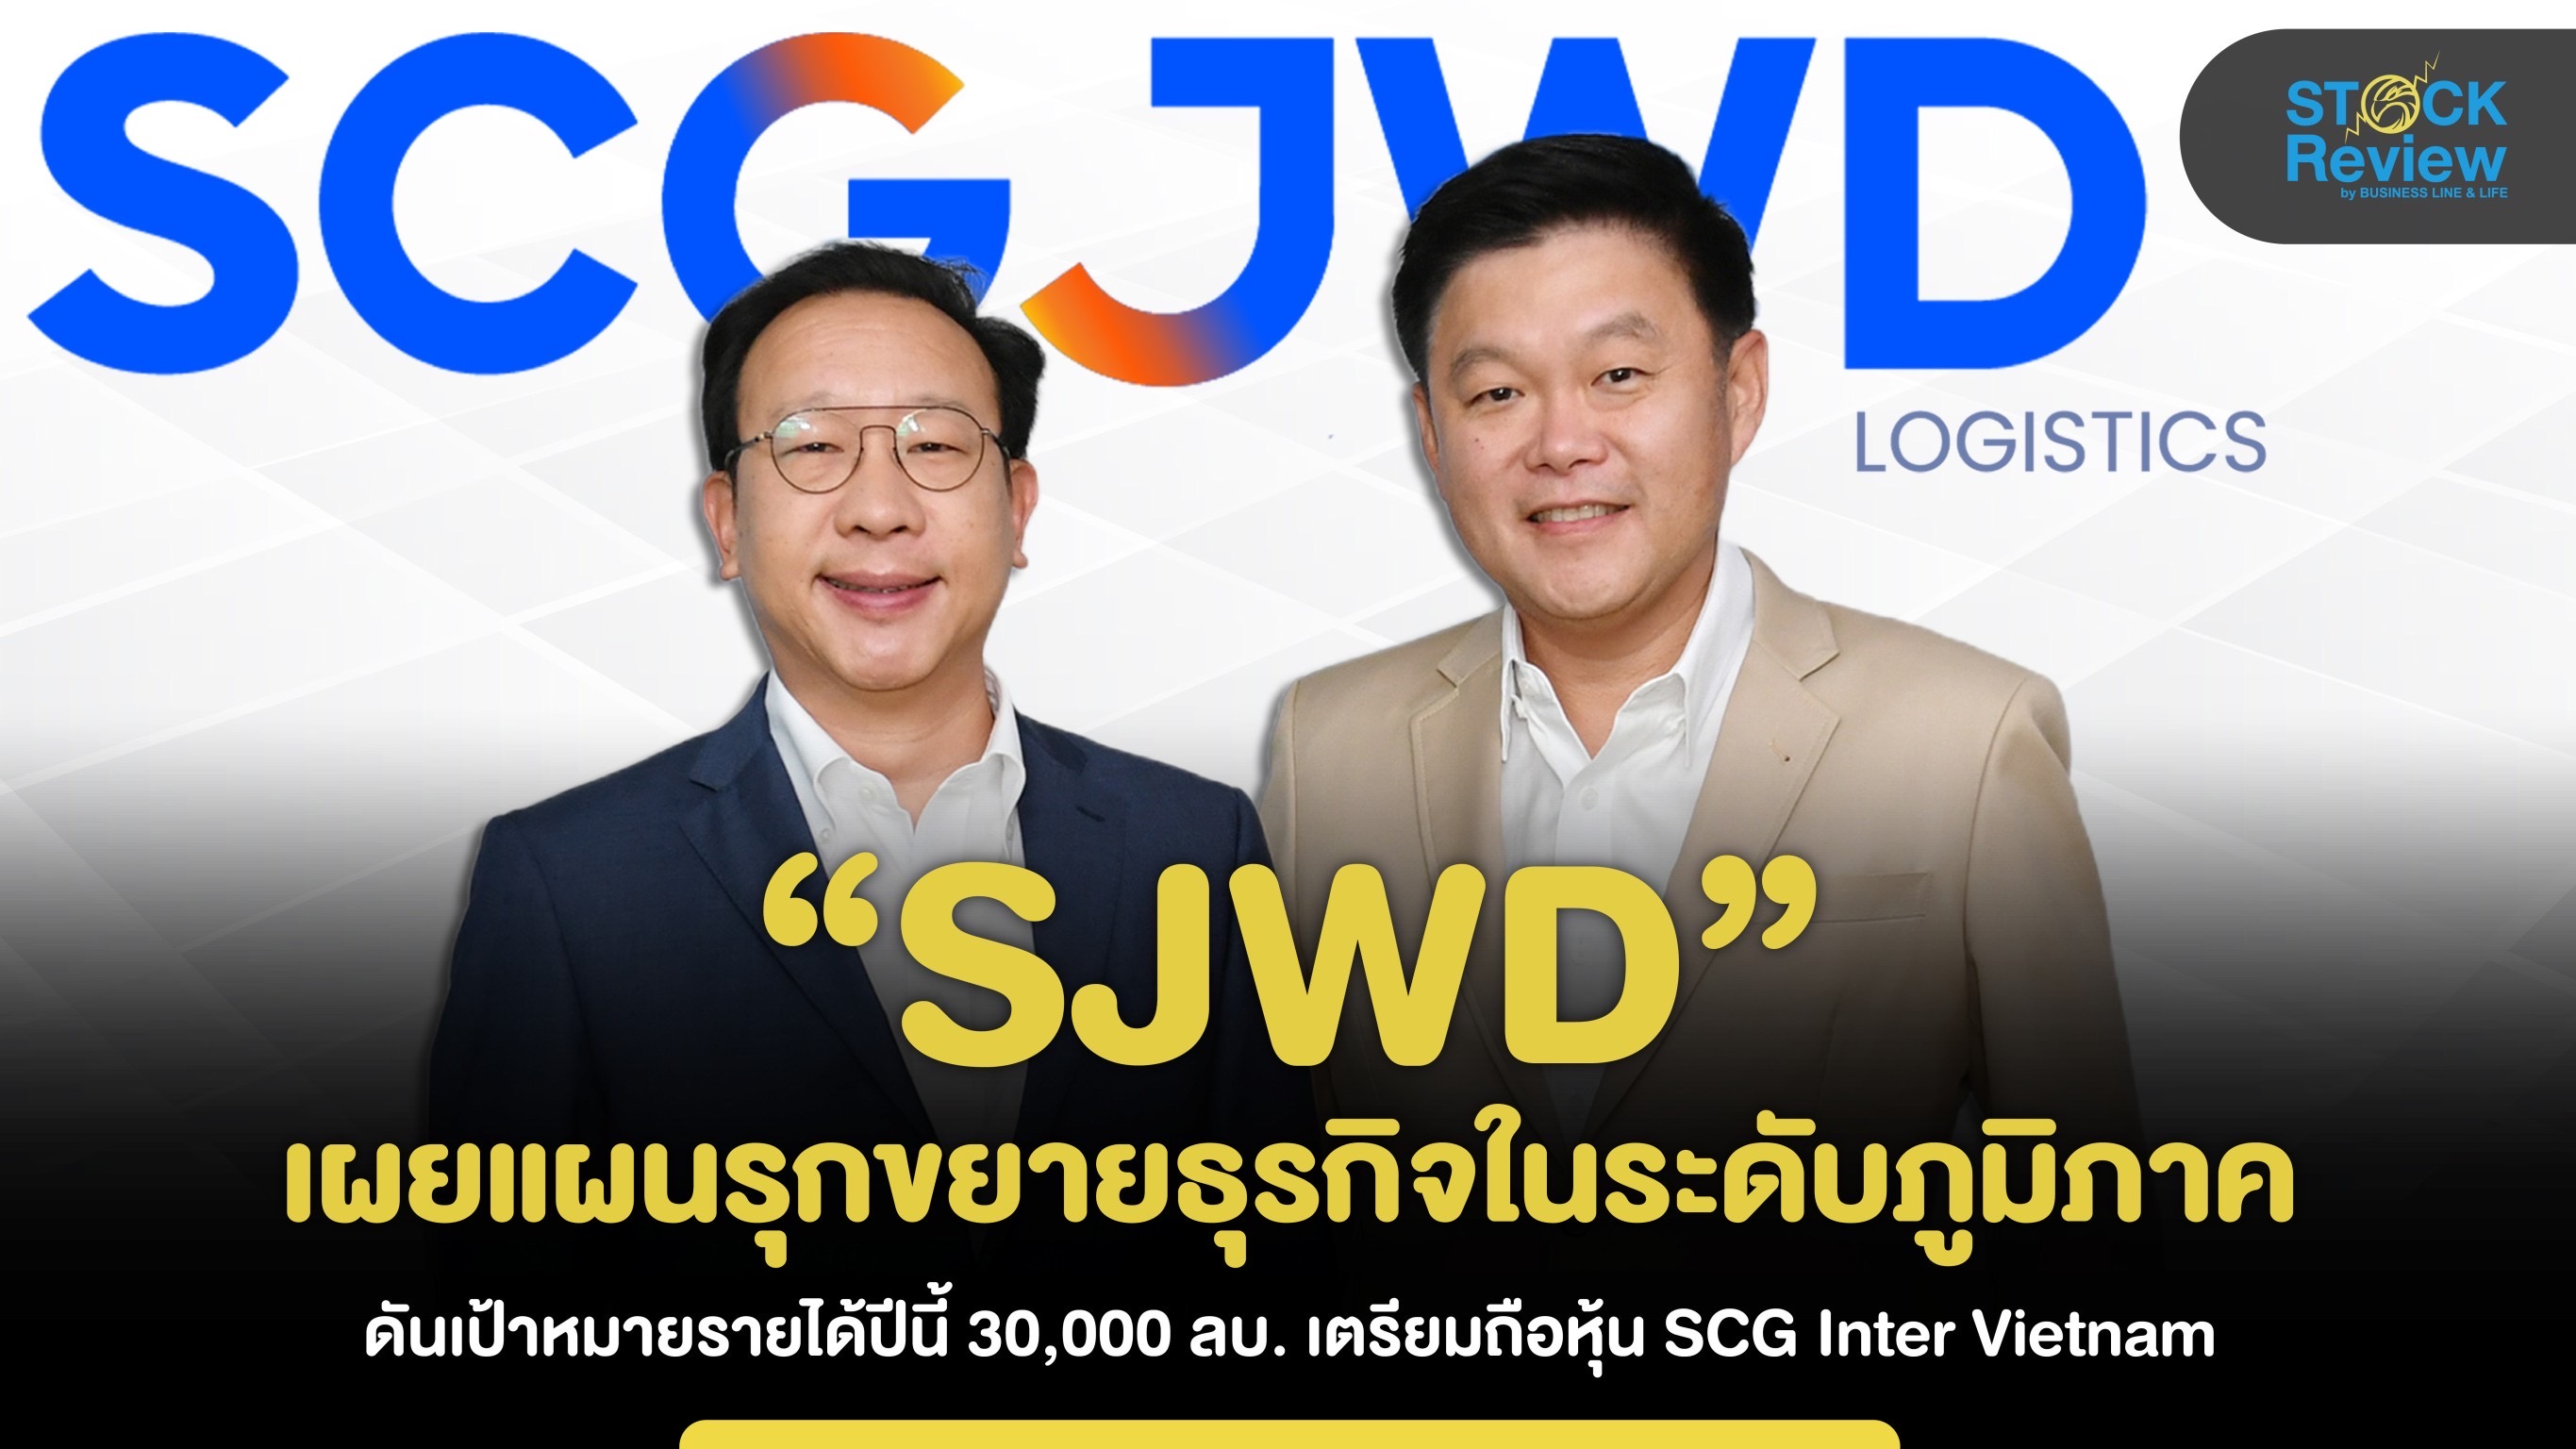 SJWD เผยแผนรุกธุรกิจภูมิภาค ตั้งเป้าปี66 รายได้โต 30,000 ล้านบาท